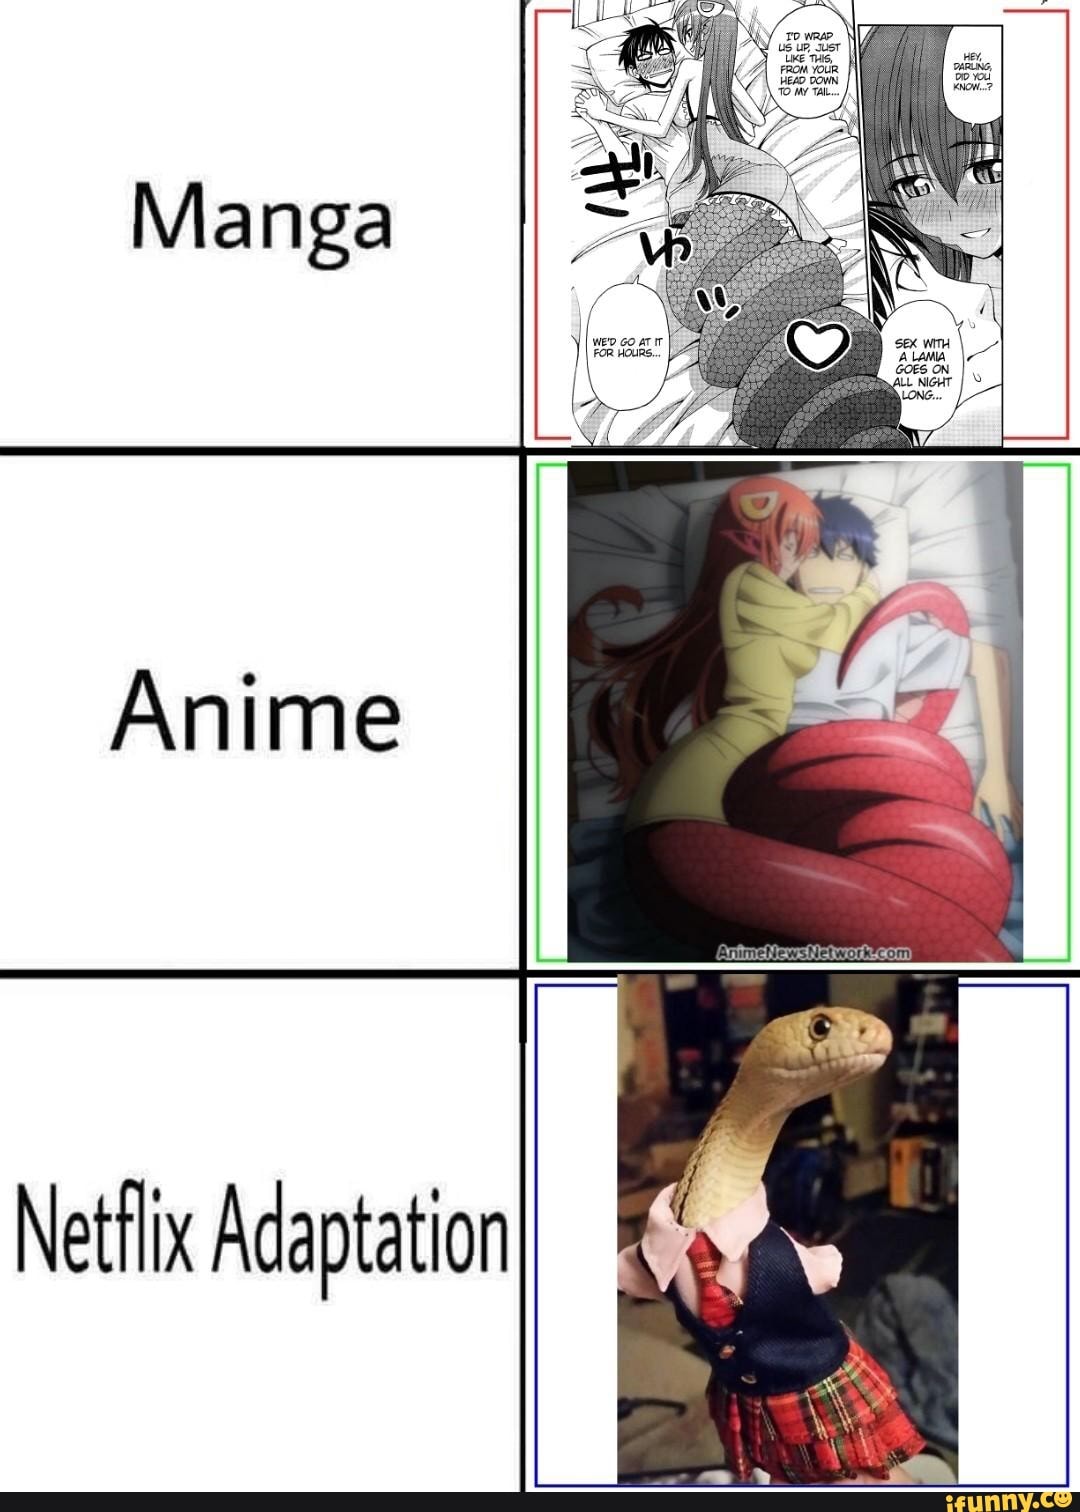 Manga Anime Netflix Adaptation iFunny